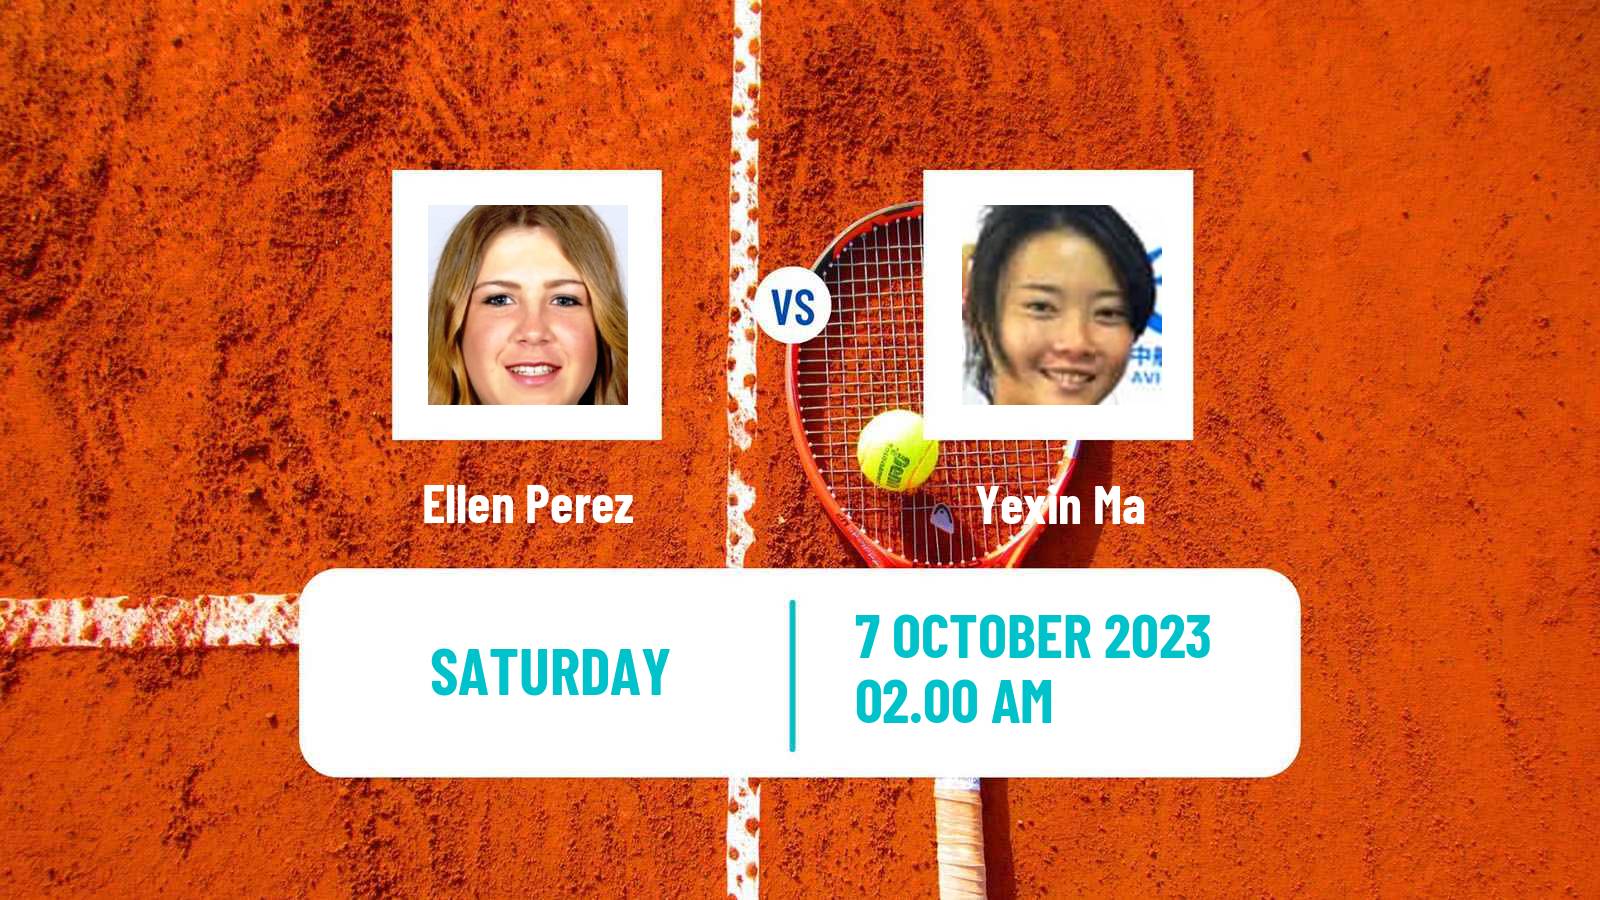 Tennis WTA Zhengzhou Ellen Perez - Yexin Ma